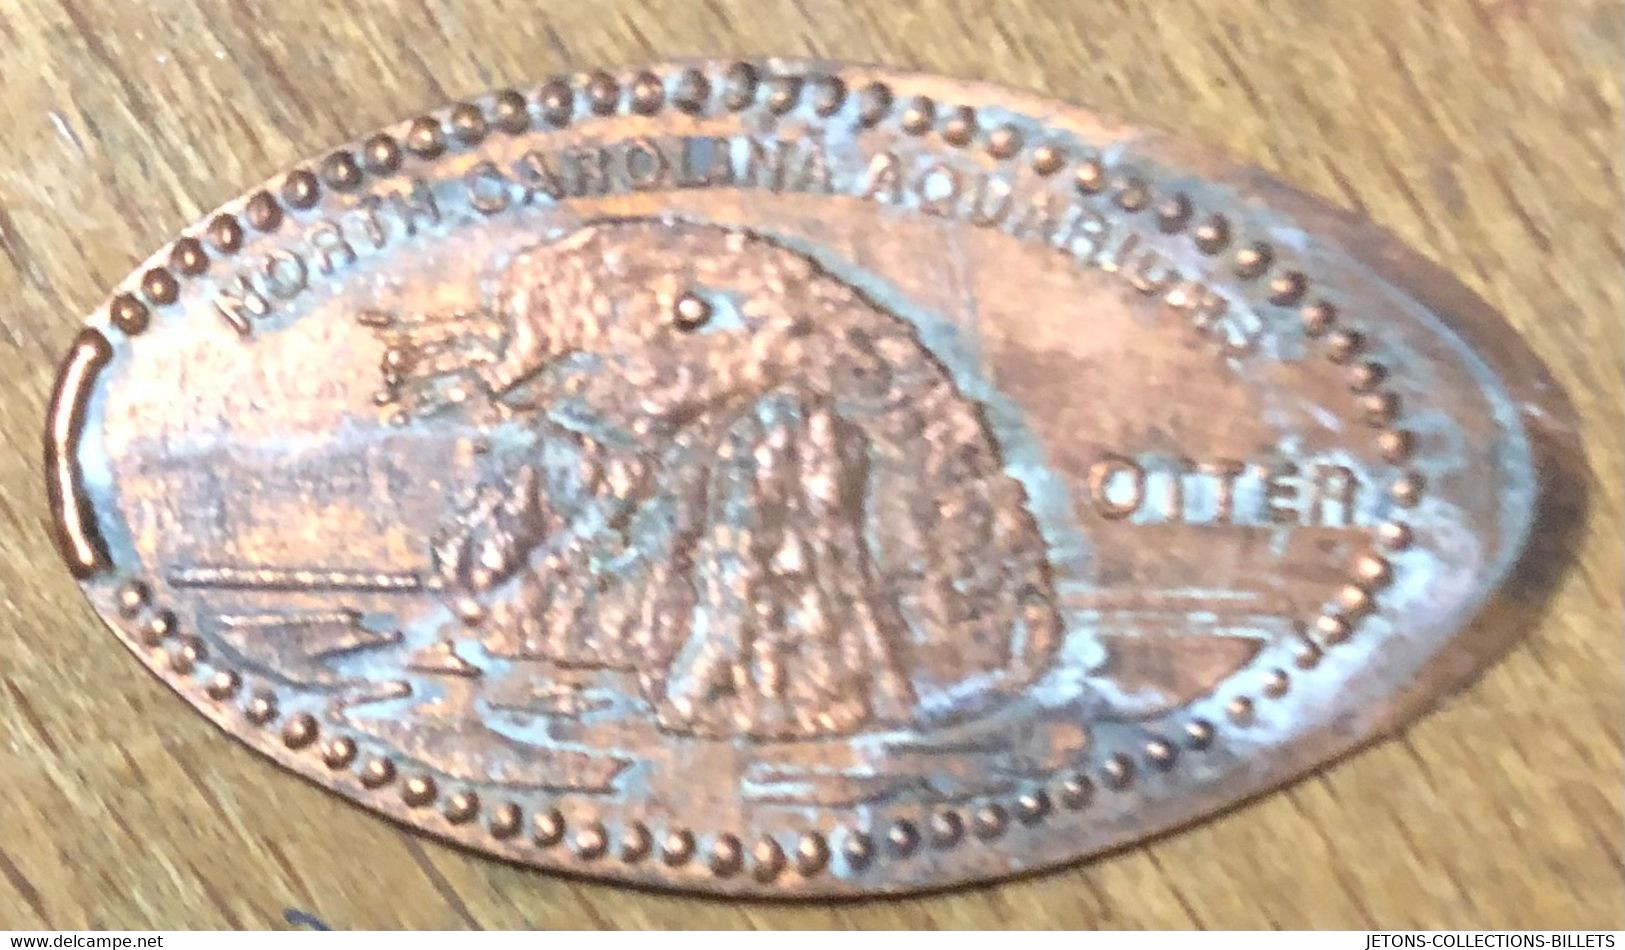 ÉTATS-UNIS USA NORTH CAROLINA AQUARIUMS OTTER PIÈCE ÉCRASÉE PENNY ELONGATED COIN MEDAILLE TOURISTIQUE MEDALS TOKENS - Elongated Coins